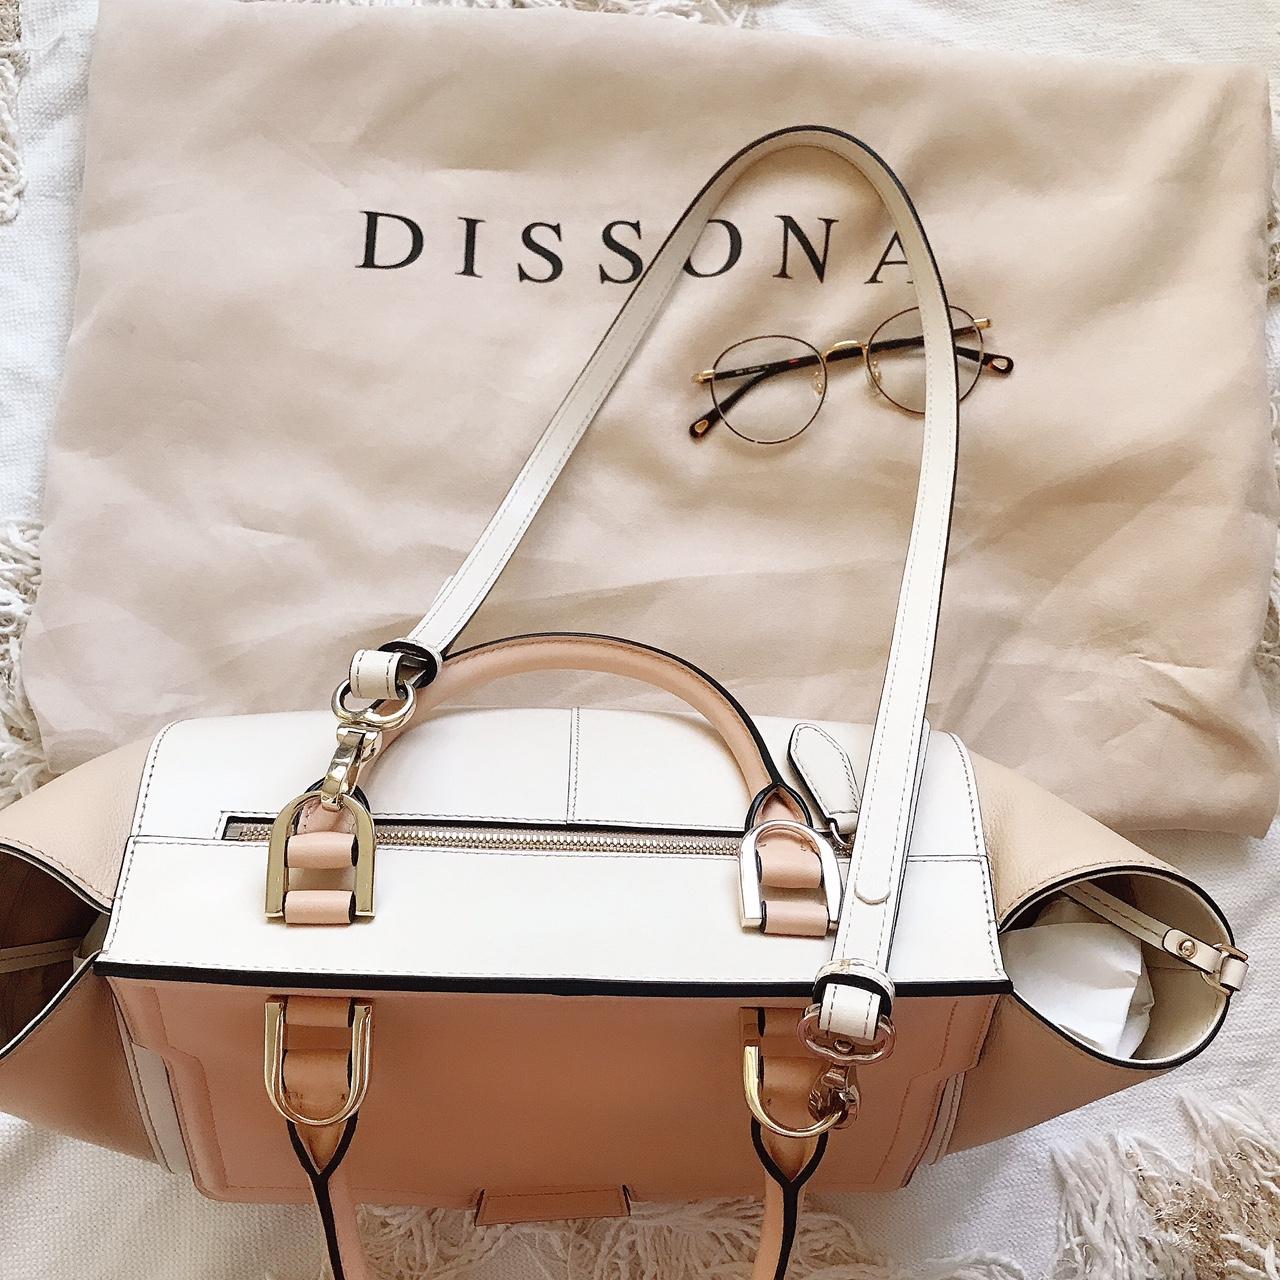 Dissona, Bags, Dissona Leather Bag